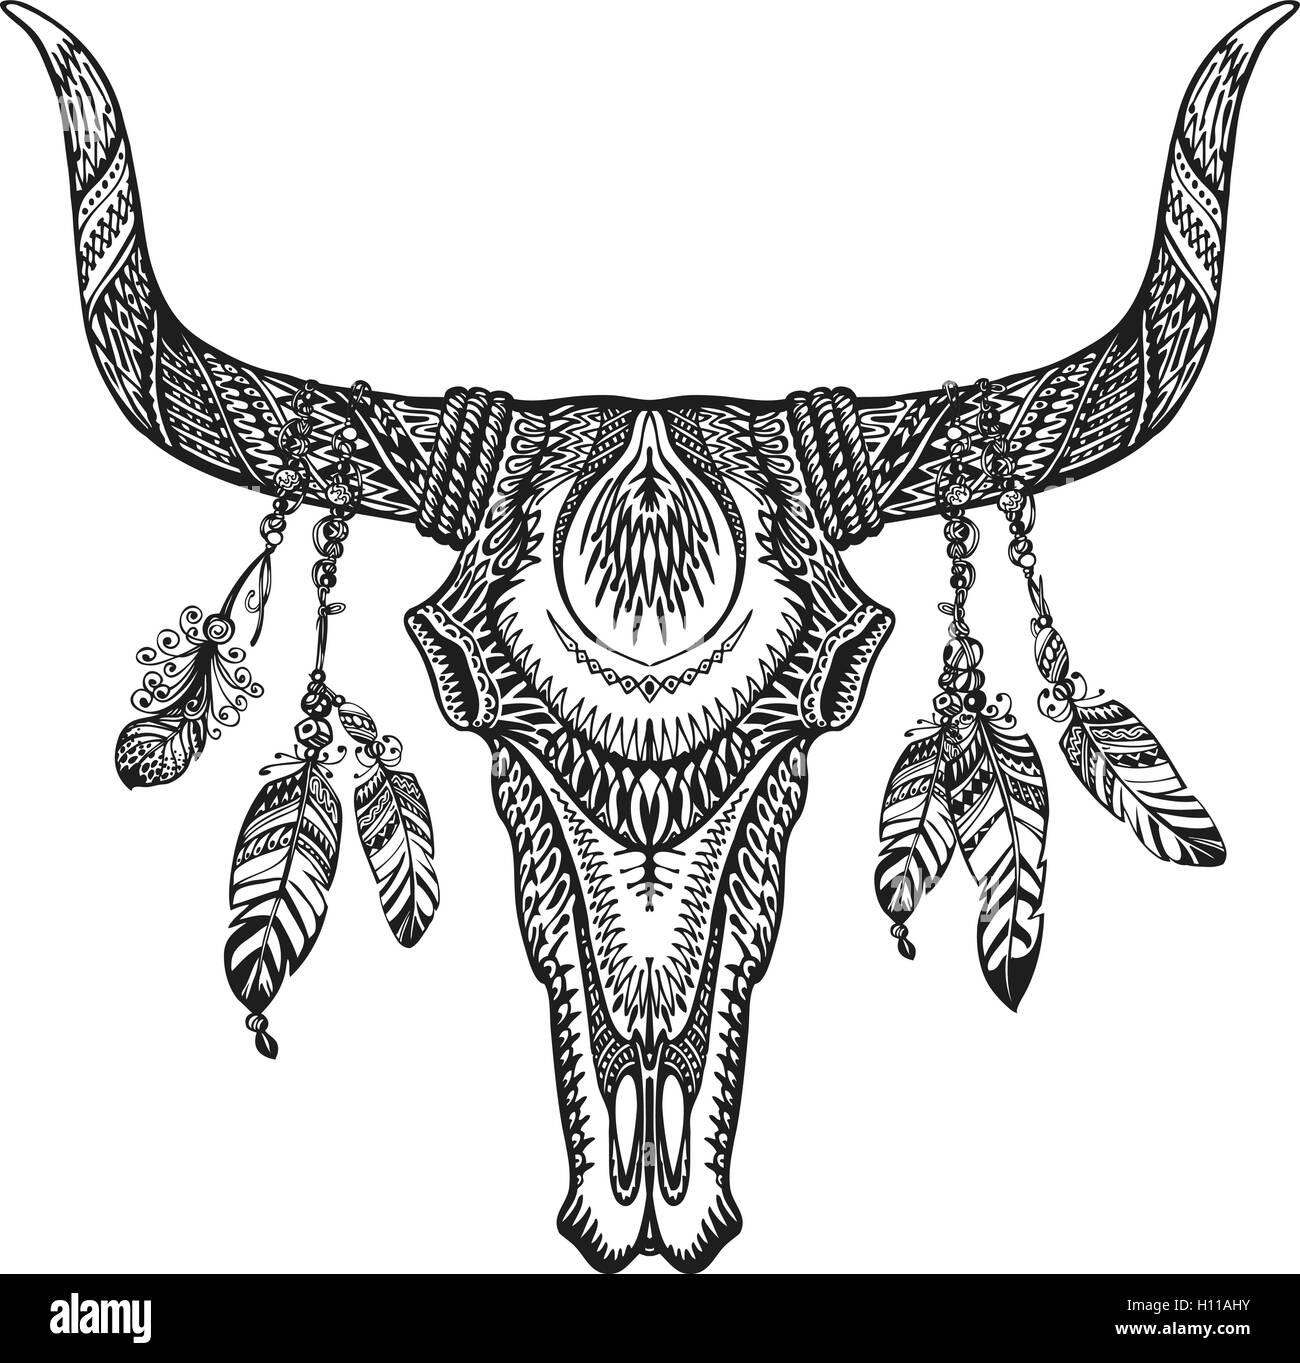 Craneo de toro con plumas. Croquis dibujados a mano Native American totem  Imagen Vector de stock - Alamy